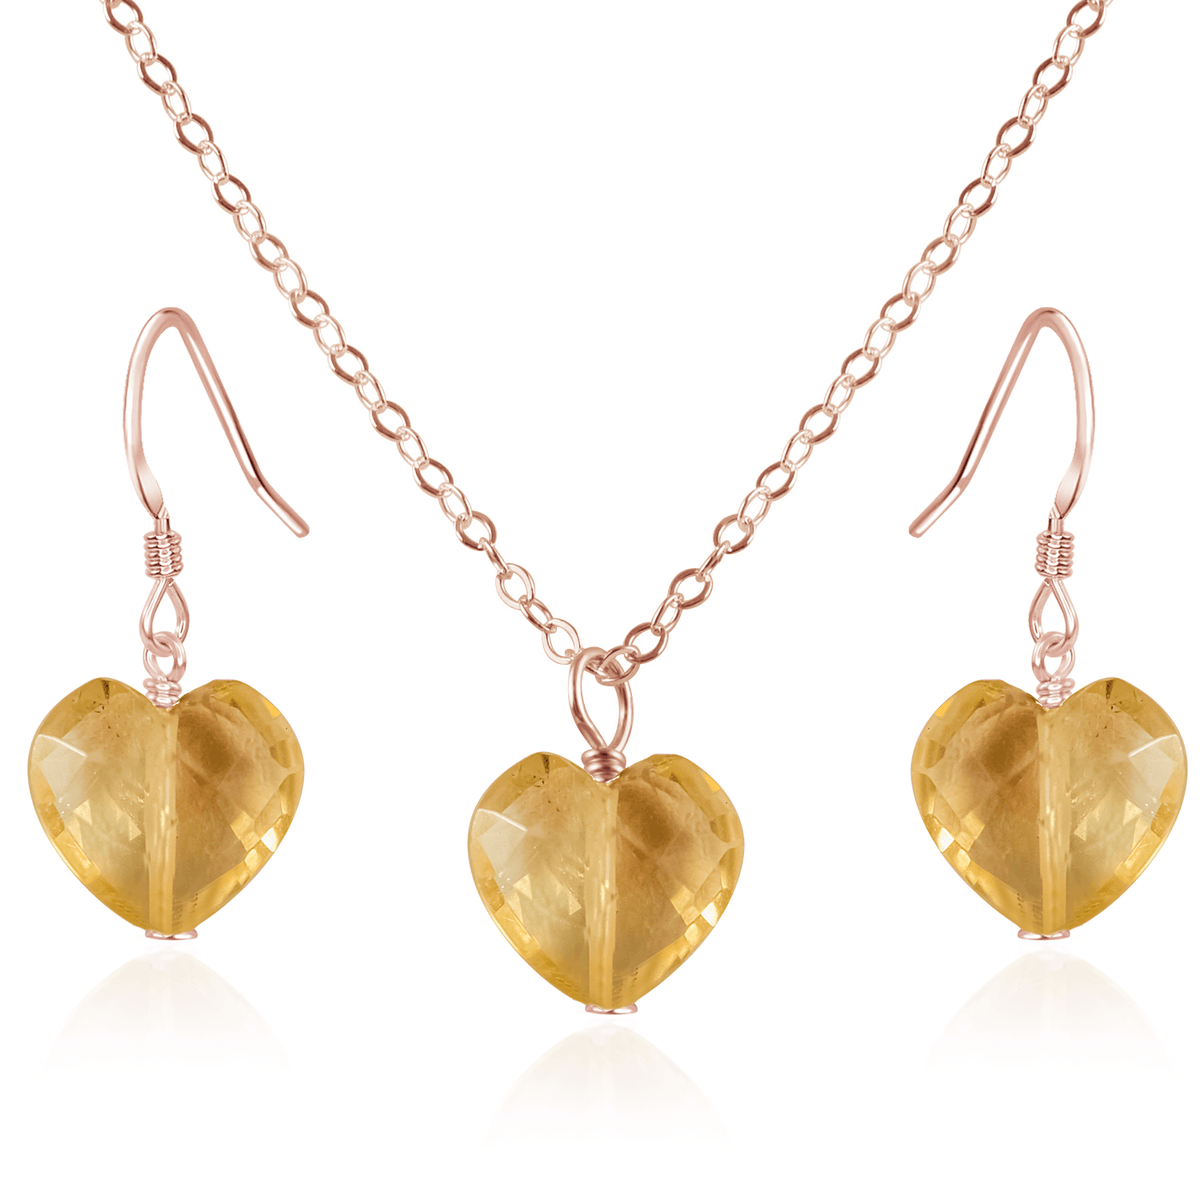 Citrine Crystal Heart Jewellery Set - Citrine Crystal Heart Jewellery Set - 14k Rose Gold Fill / Cable / Necklace & Earrings - Luna Tide Handmade Crystal Jewellery